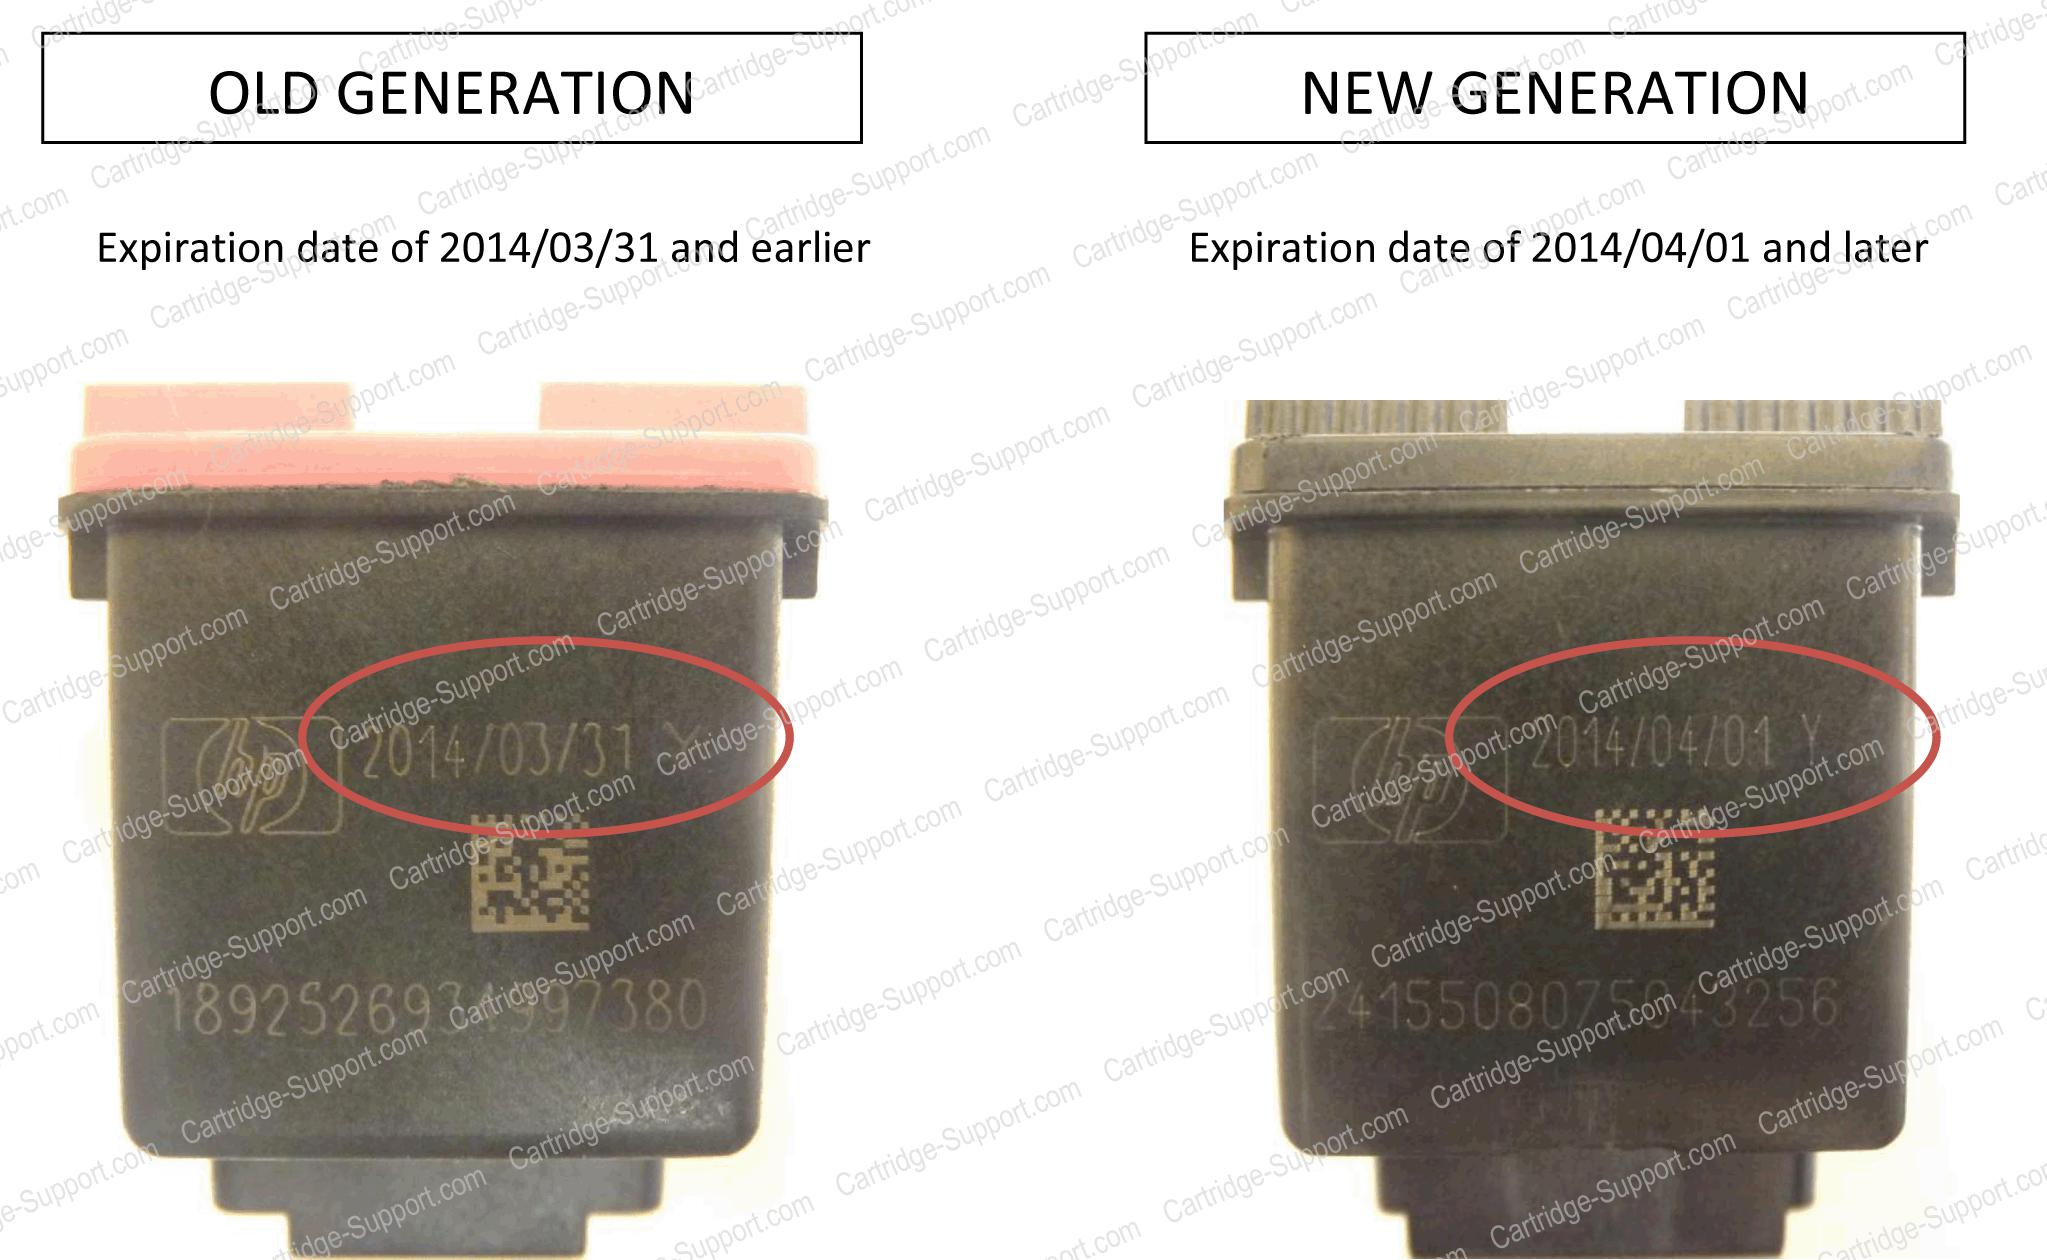 HP 61 Old  Generation vs New Generation